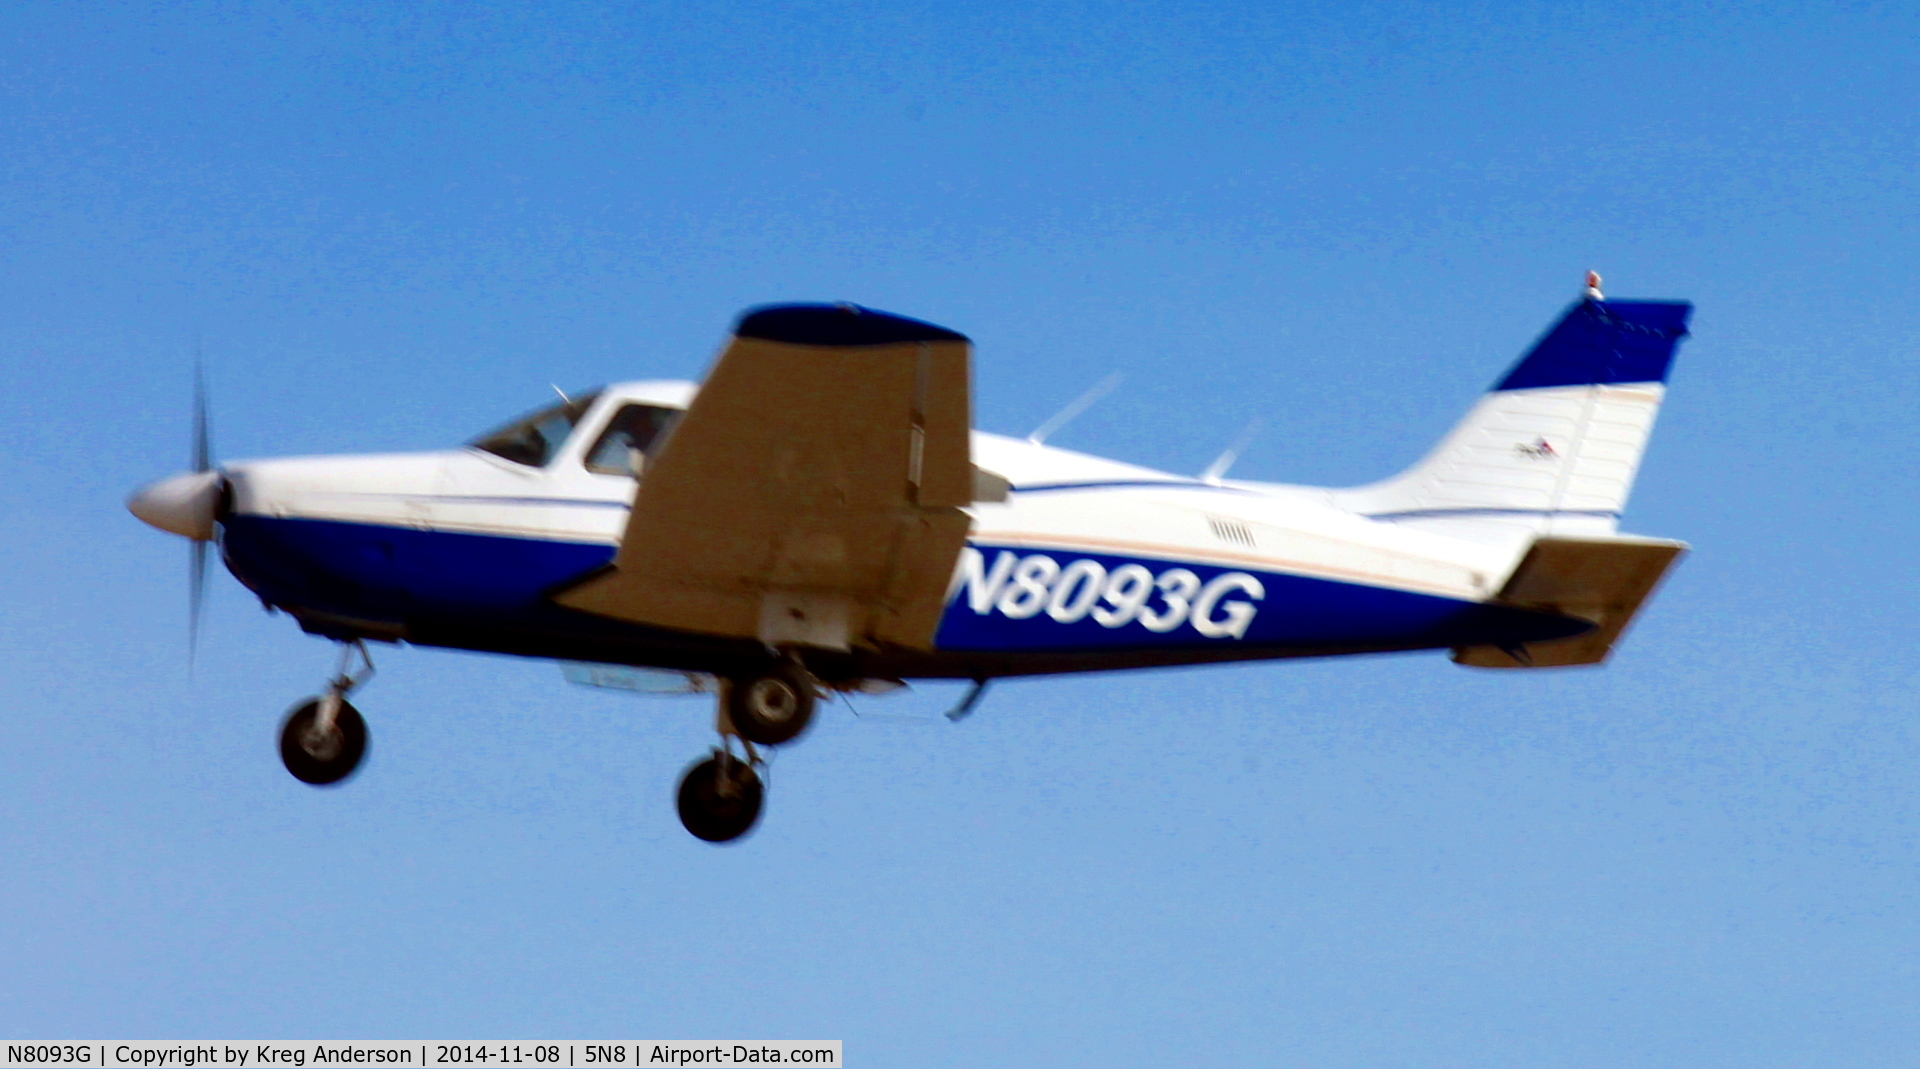 N8093G, 1979 Piper PA-28-181 C/N 28-8090100, Piper PA-28-181 Warrior taking off runway 31.